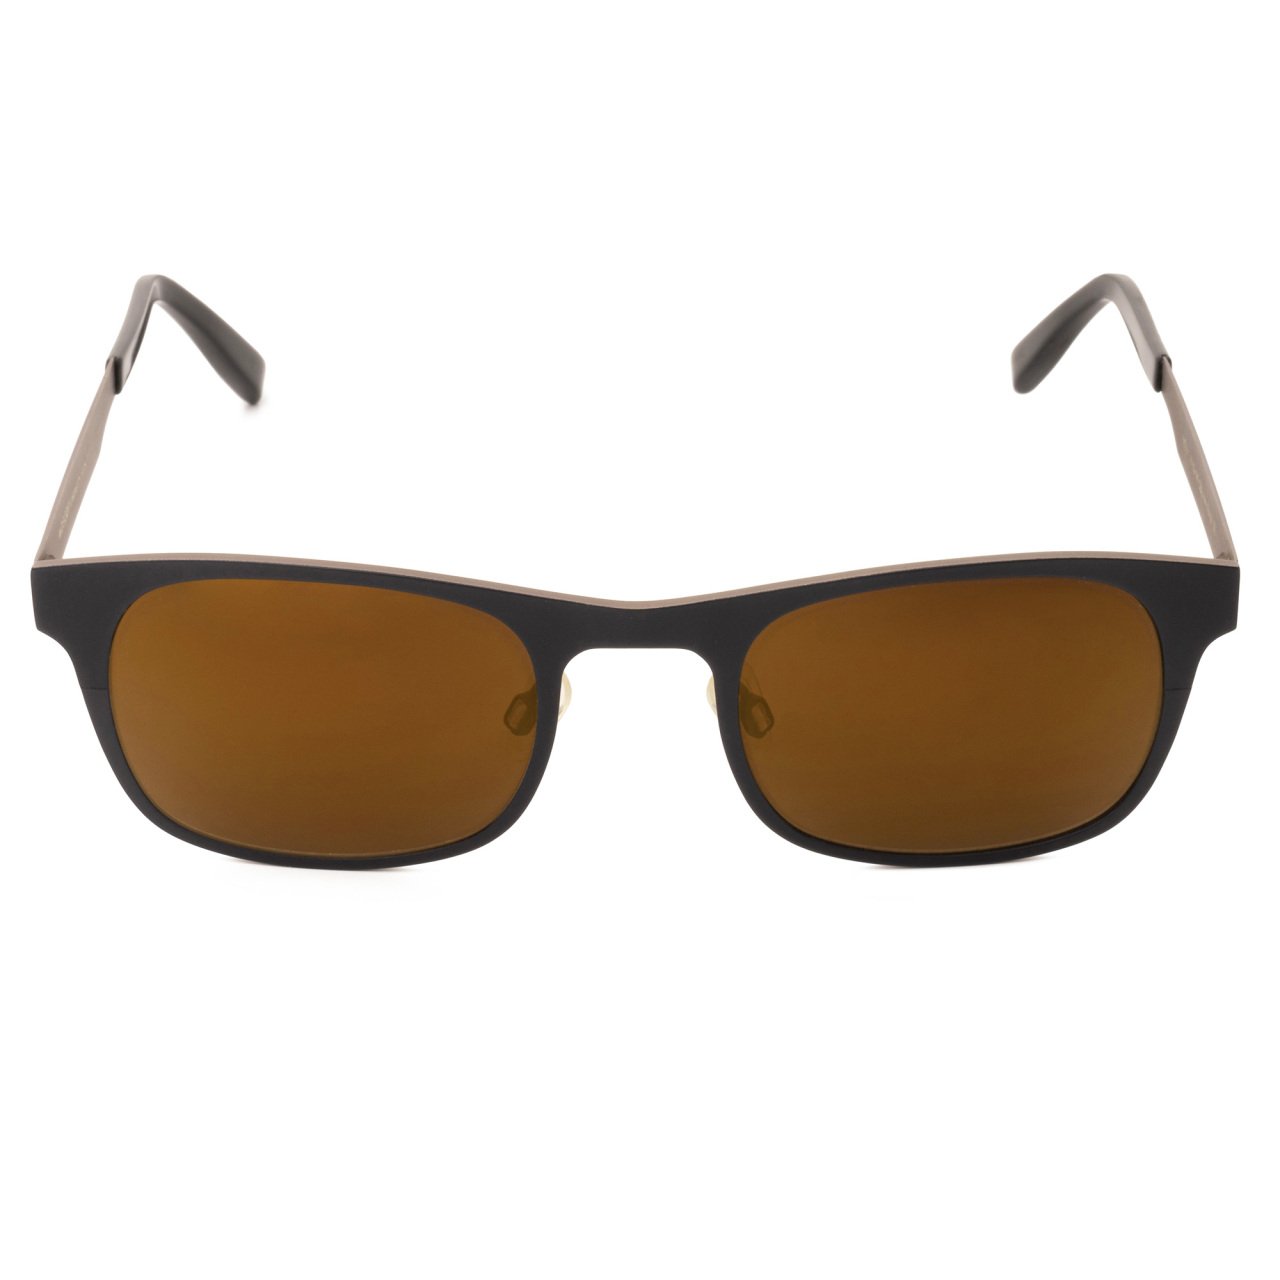 Moscot Nebb-T Unisex Sunglasses